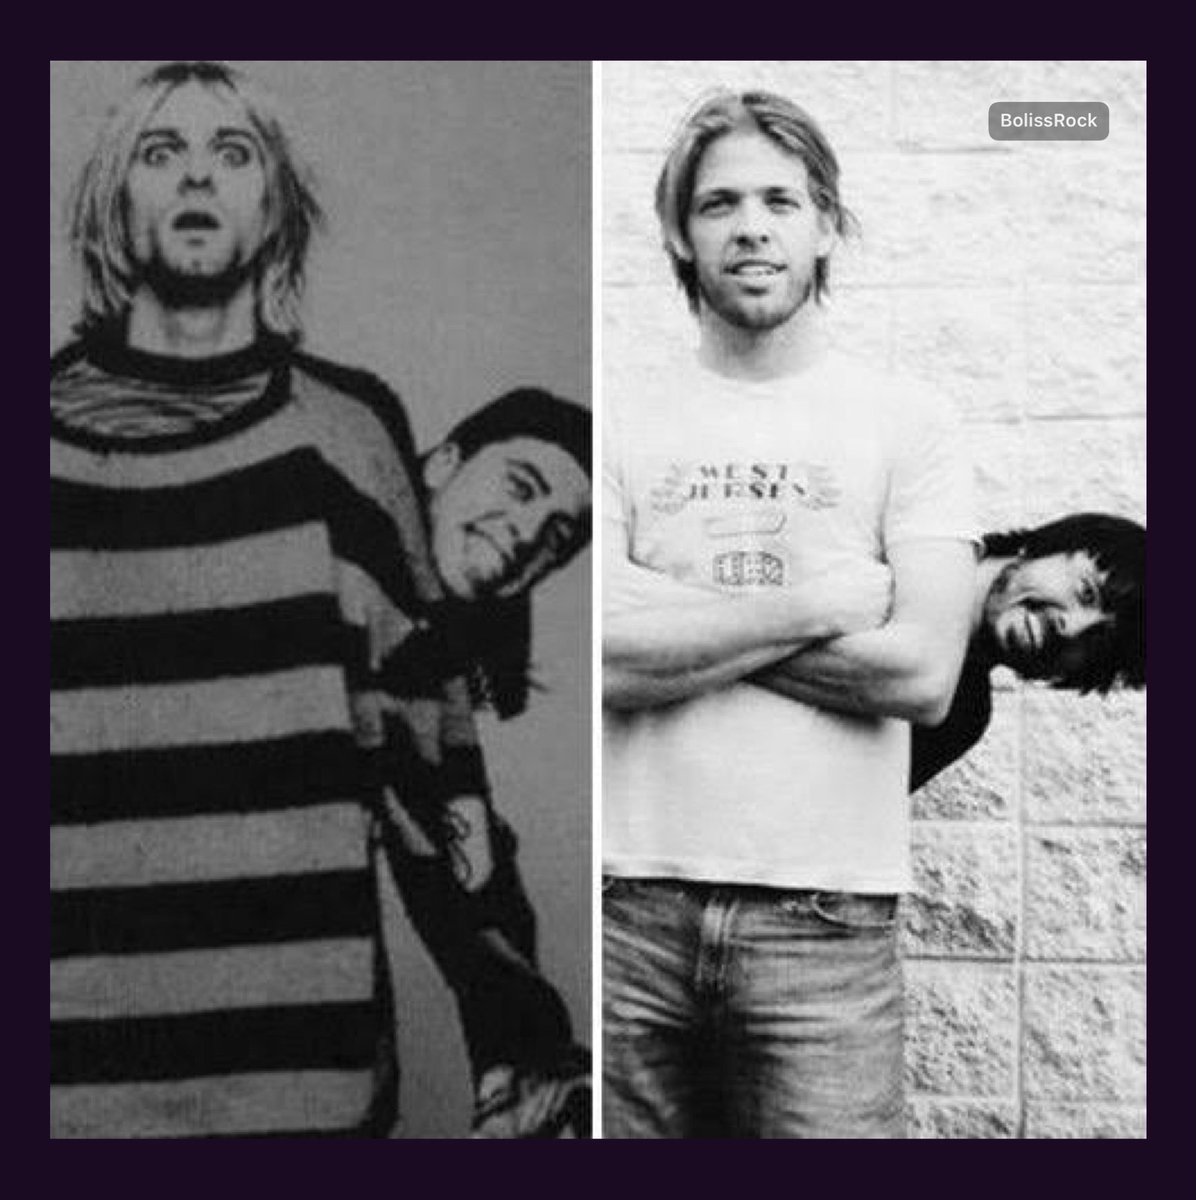 Farklı isimler aynı senaryo… 

#KurtCobain #Nirvana #DaveGrohl #TaylorHawkins #FooFighters